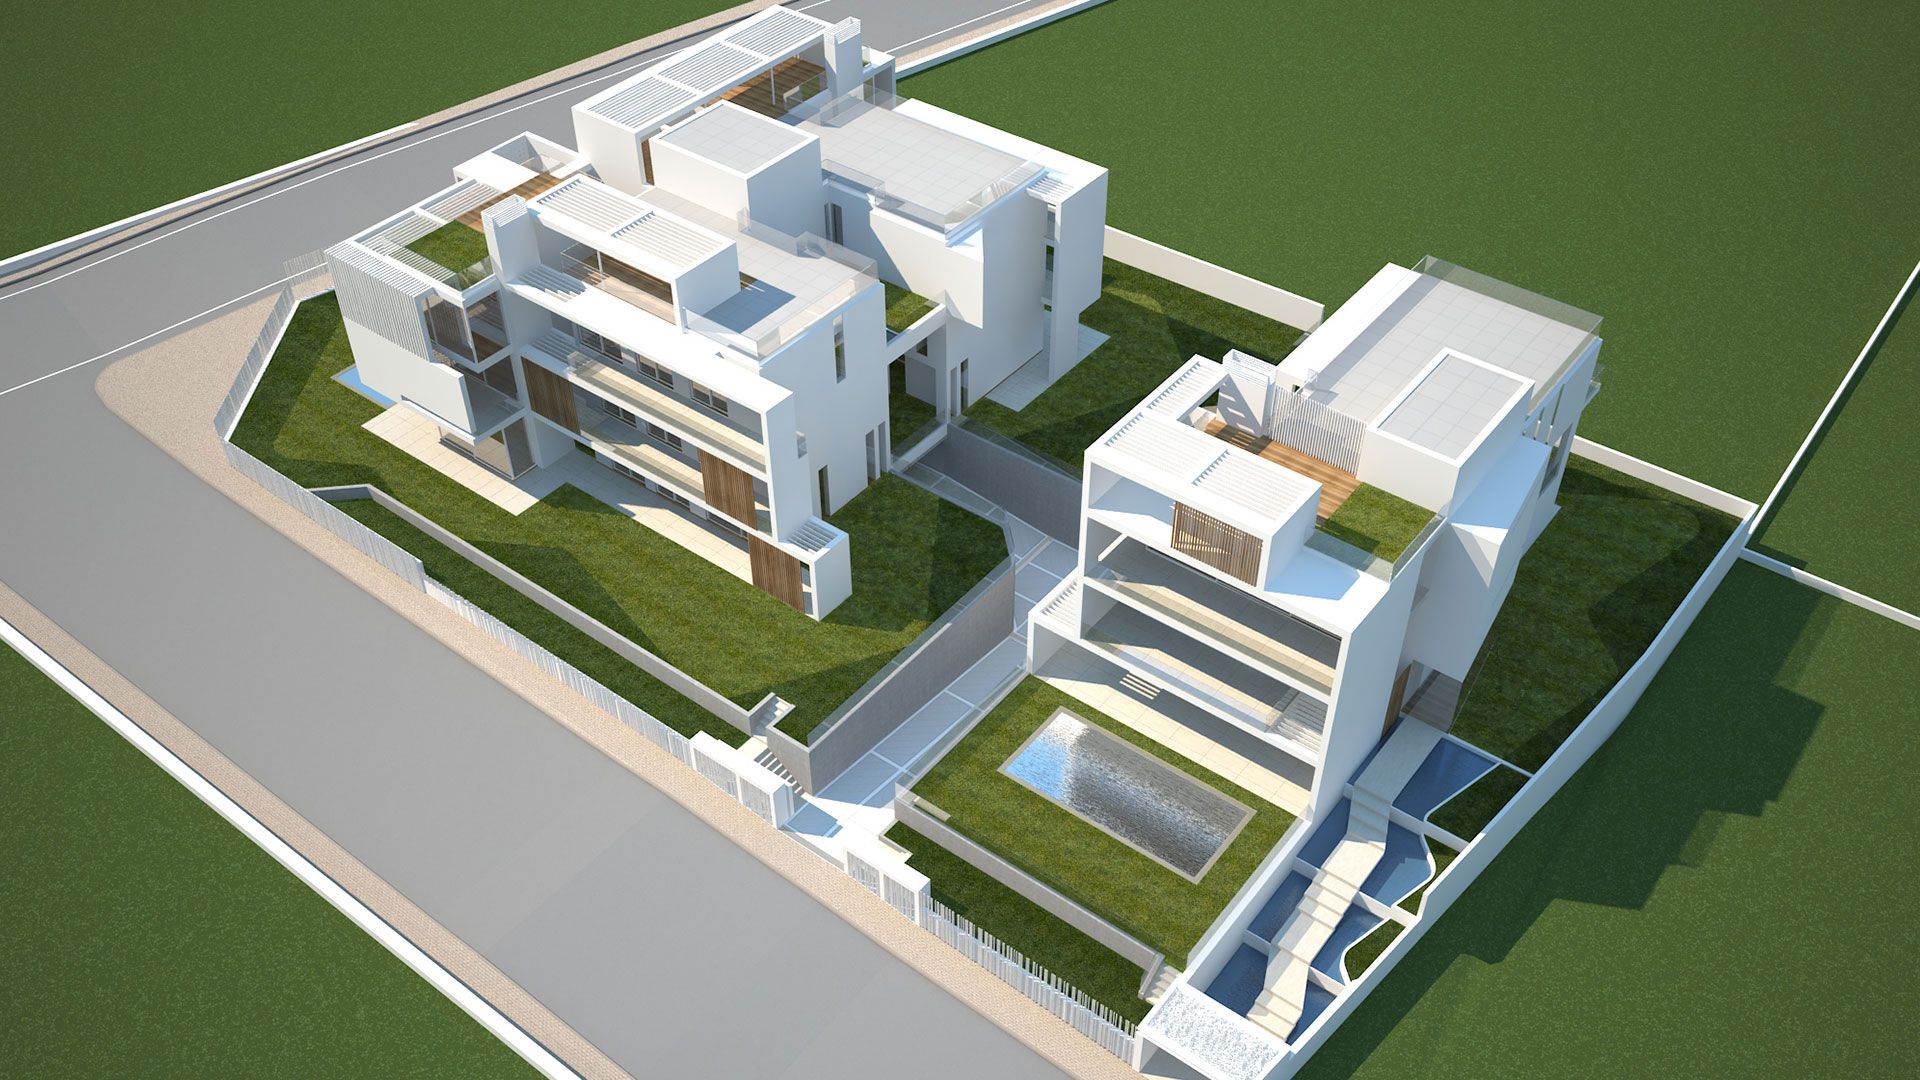 Construction & Interior Design of a Housing Complex, Kifisia, Athens